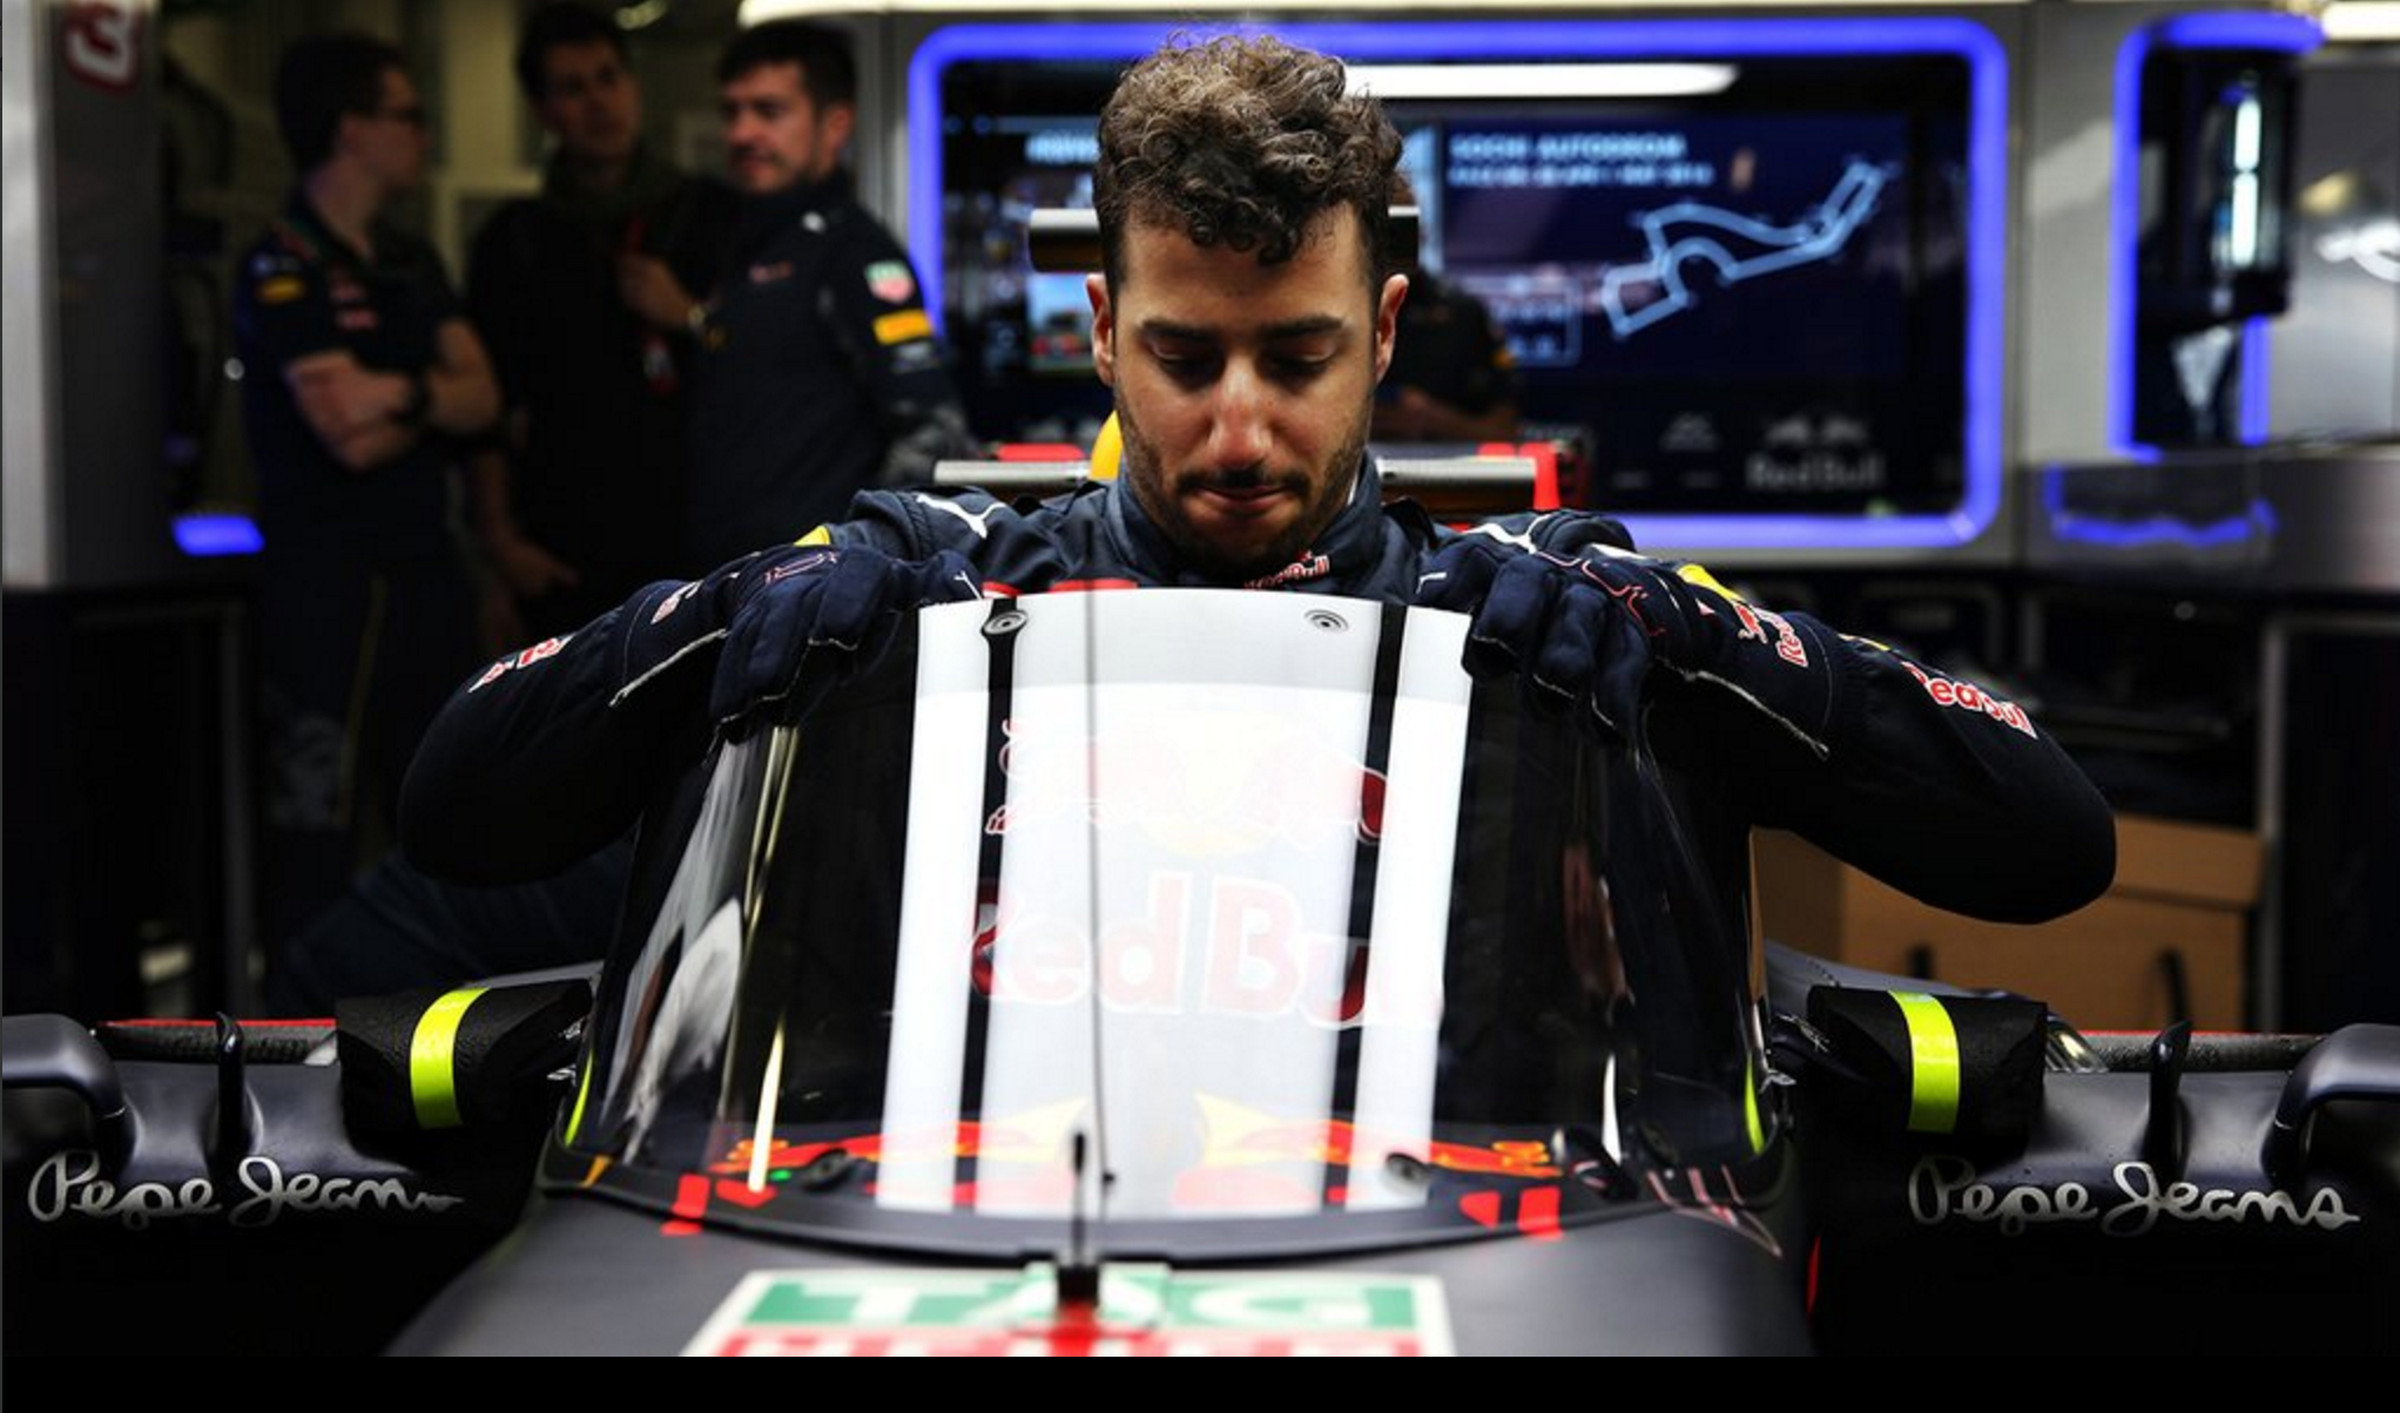 Red Bull racing's aeroscreen in photos